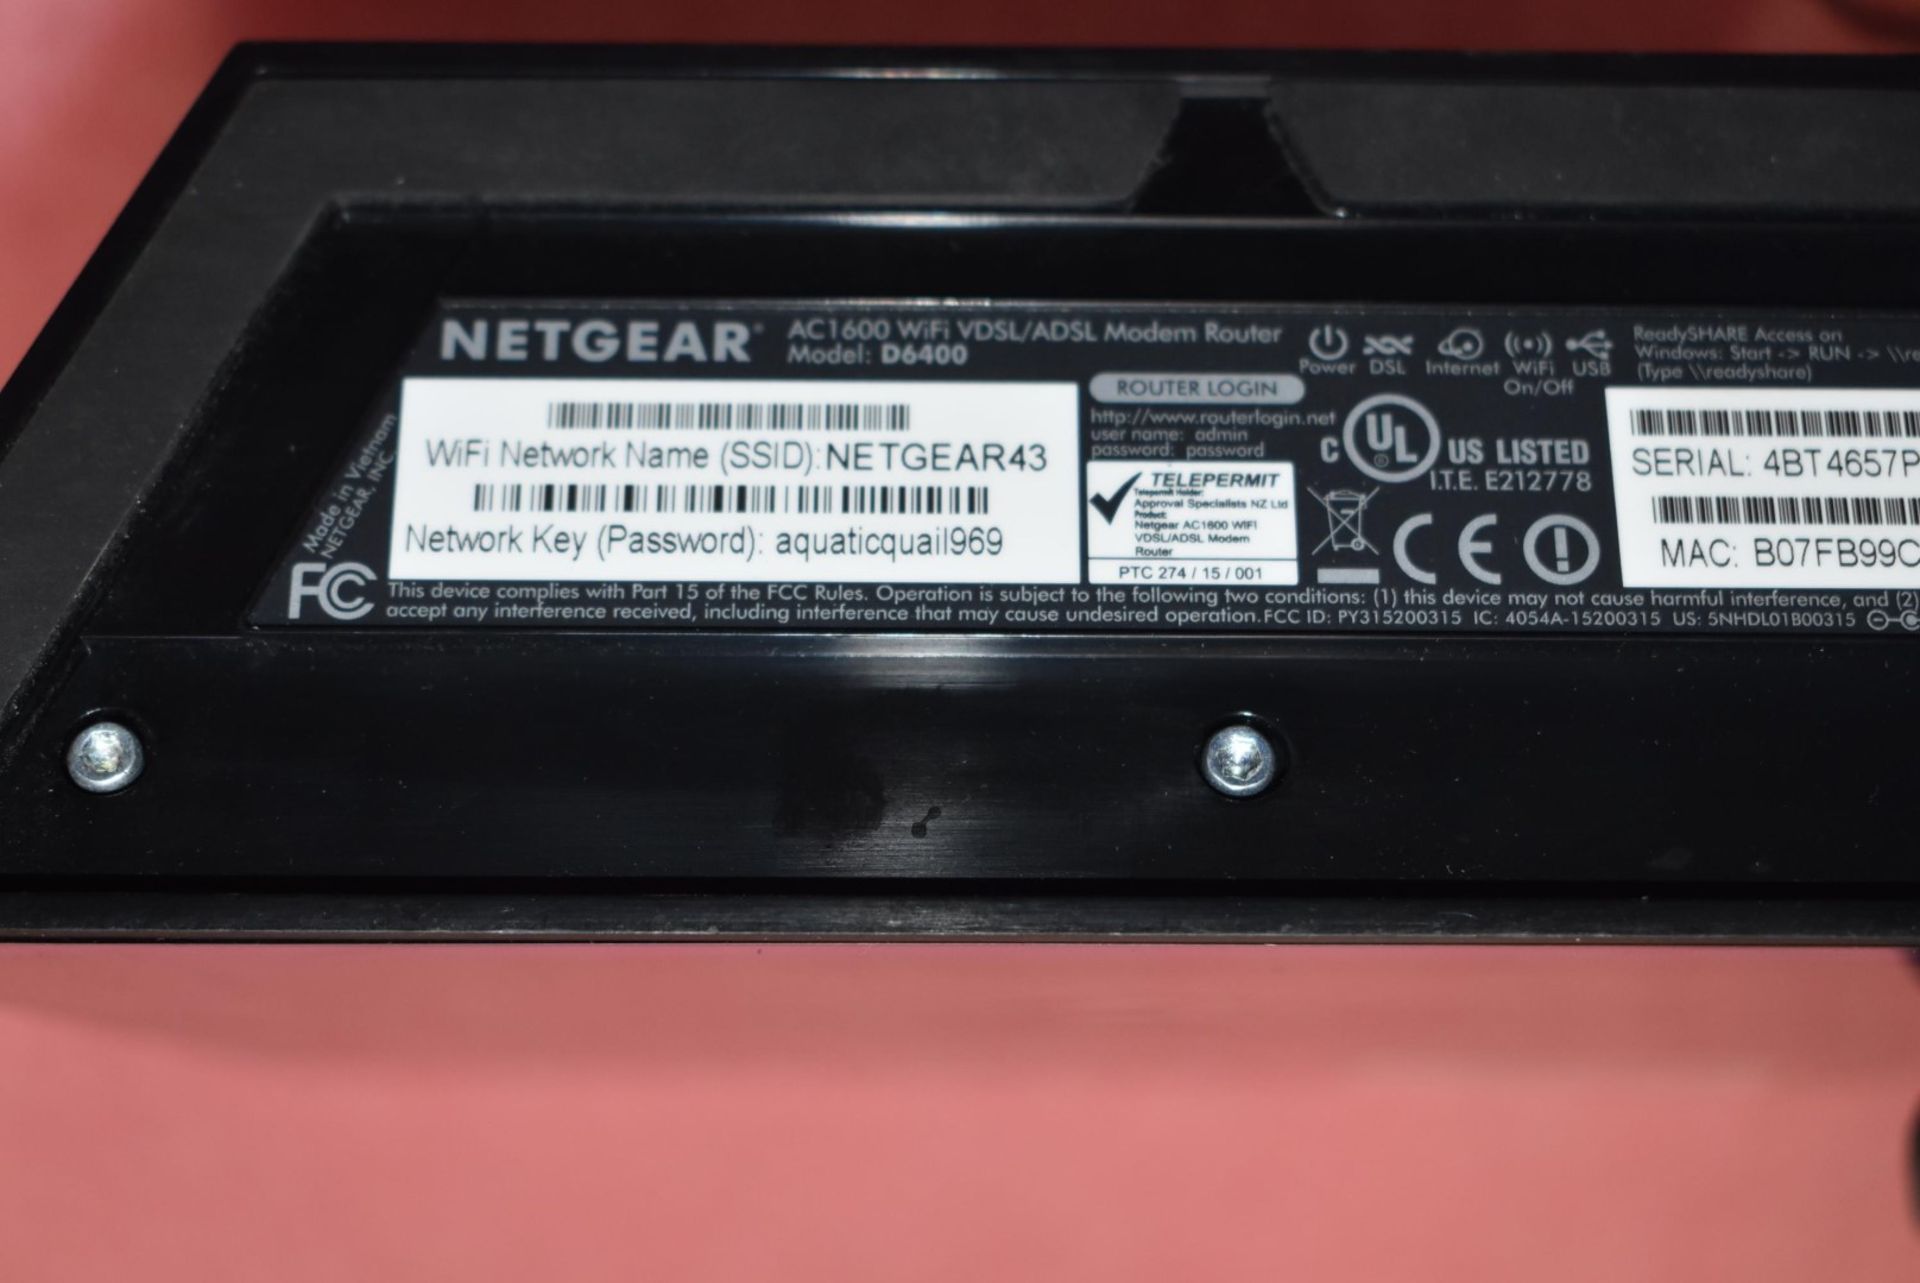 1 x Netgear D6400 AC1600 WiFi VDSL/ADSL Modem Router - Includes Power Adaptor - Image 4 of 4